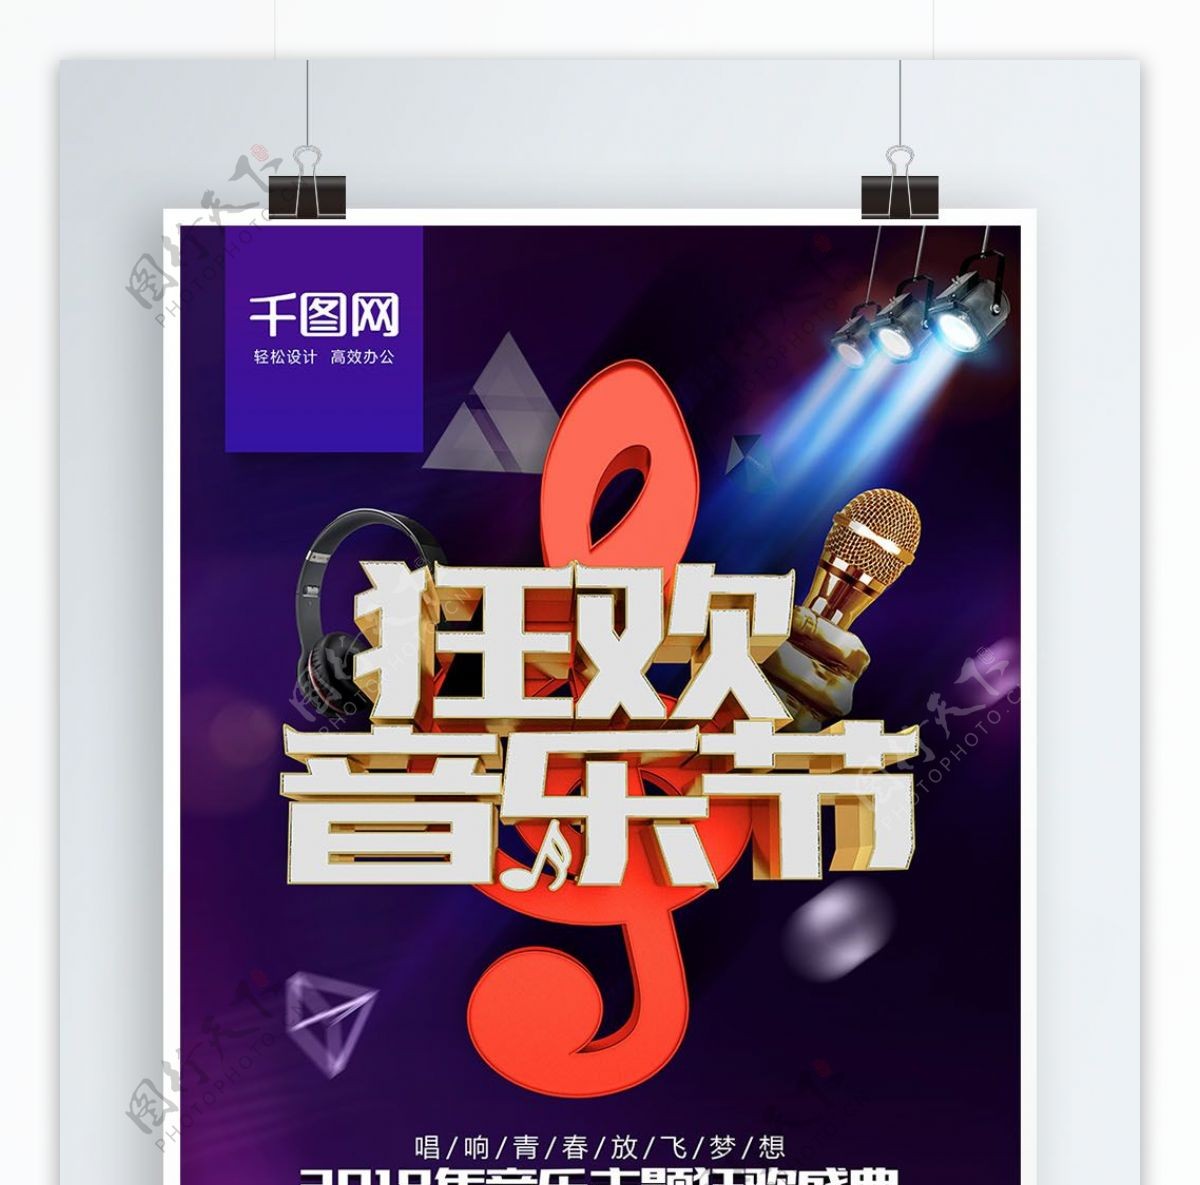 C4D金属文字狂欢音乐节商业海报